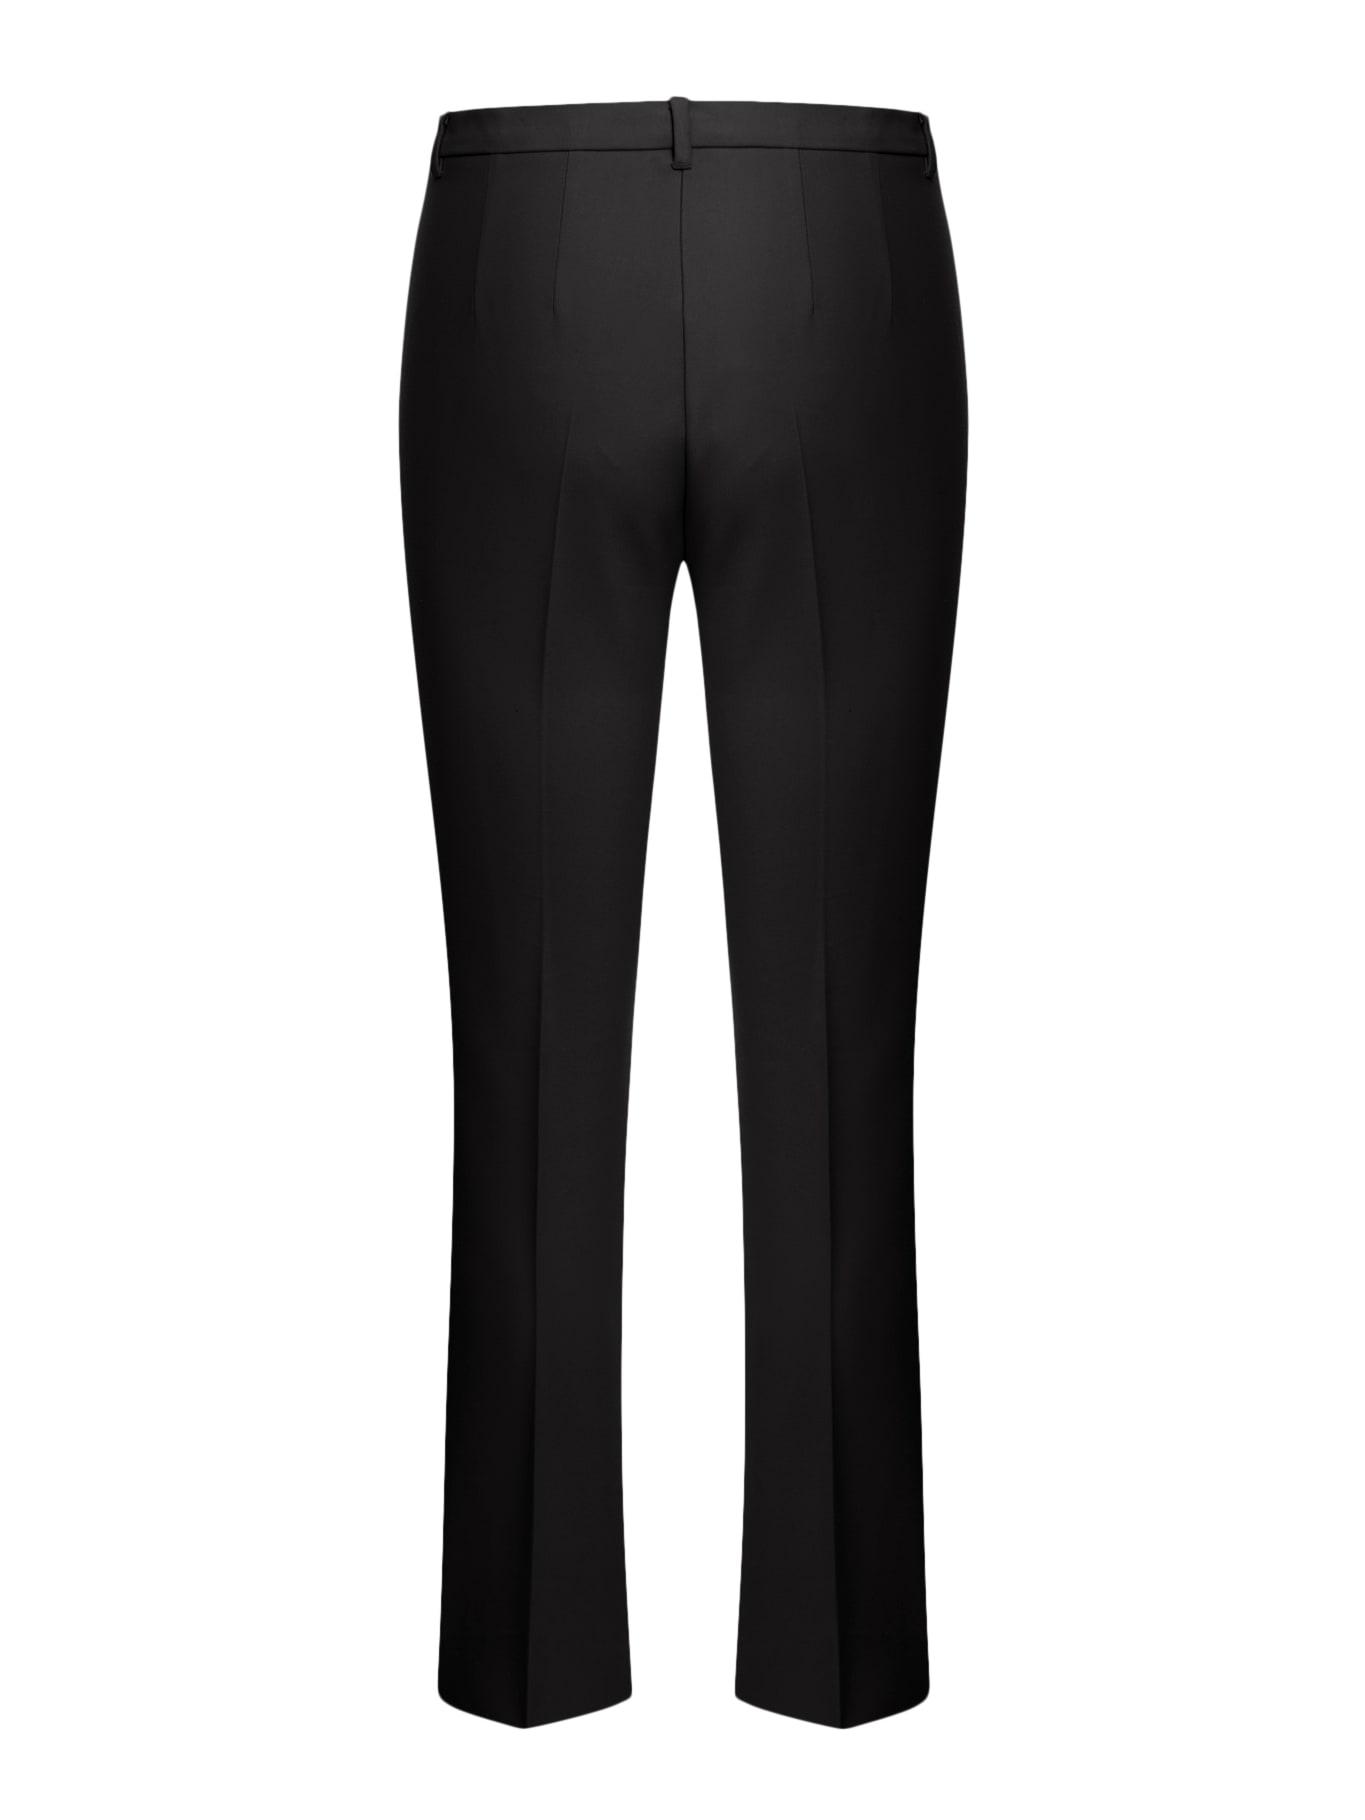 MAX MARA: wool pants - Black | Max Mara pants 2311360237600 online at  GIGLIO.COM